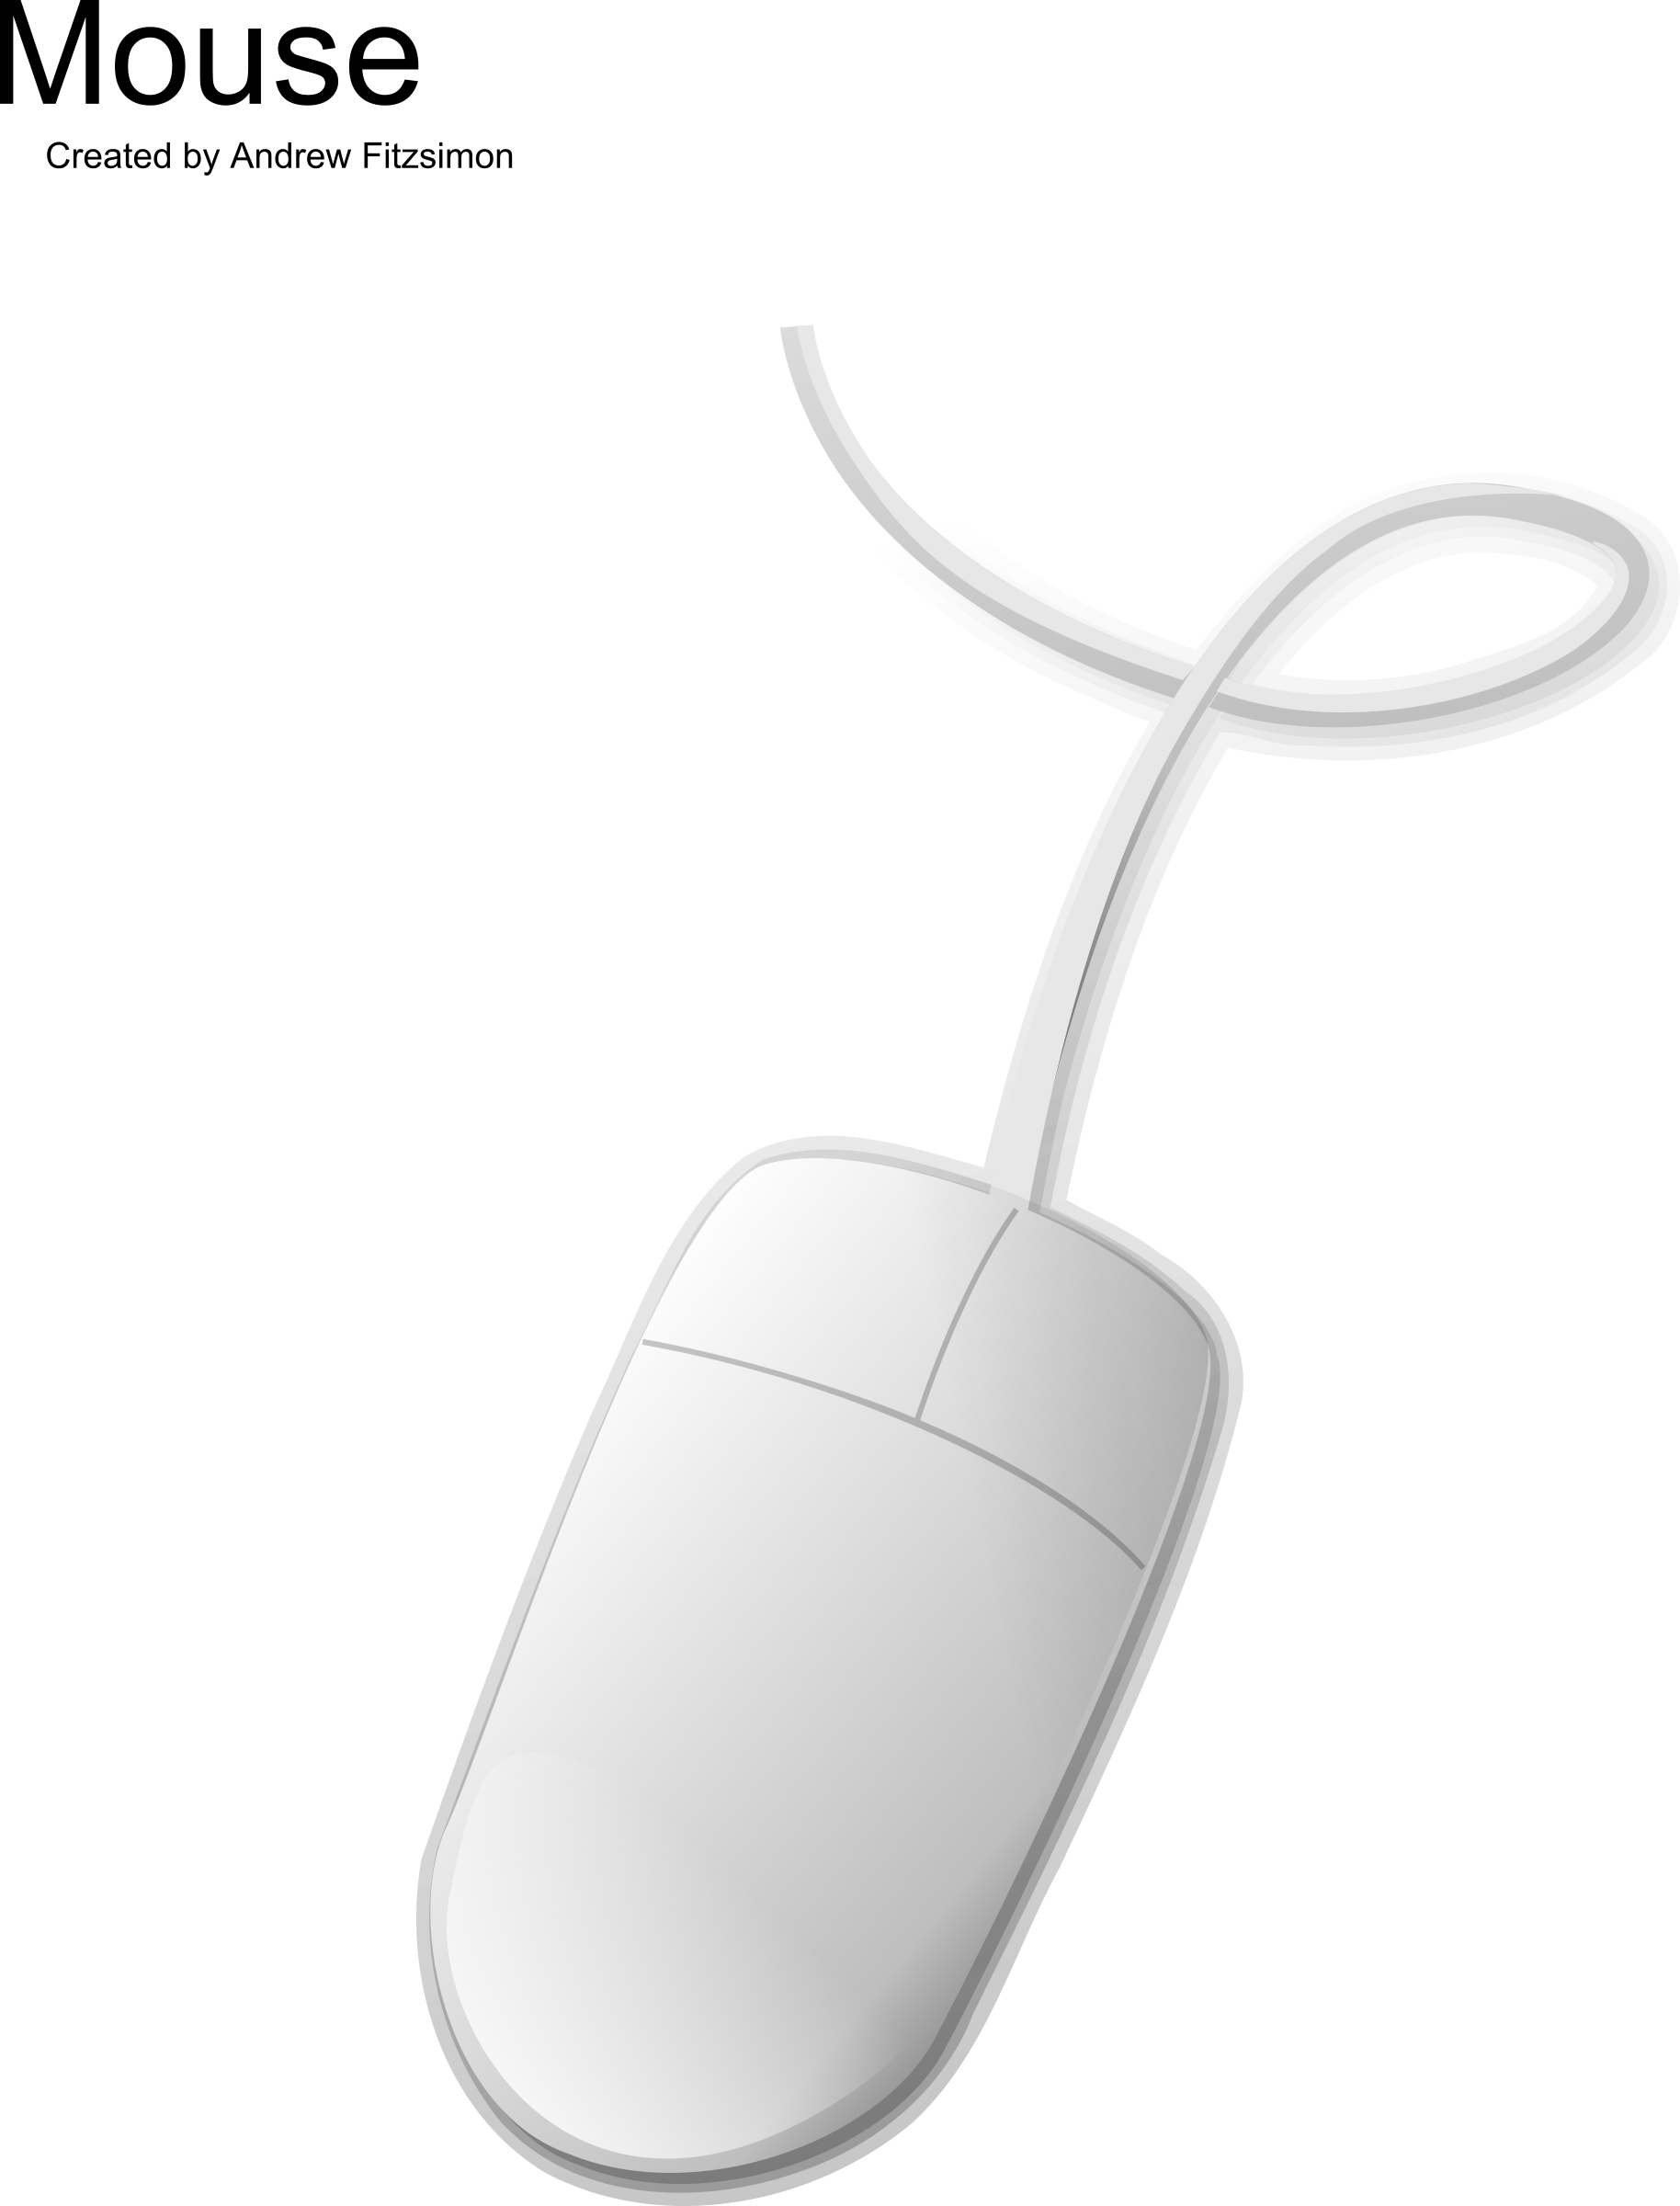 PC mouse Transparan